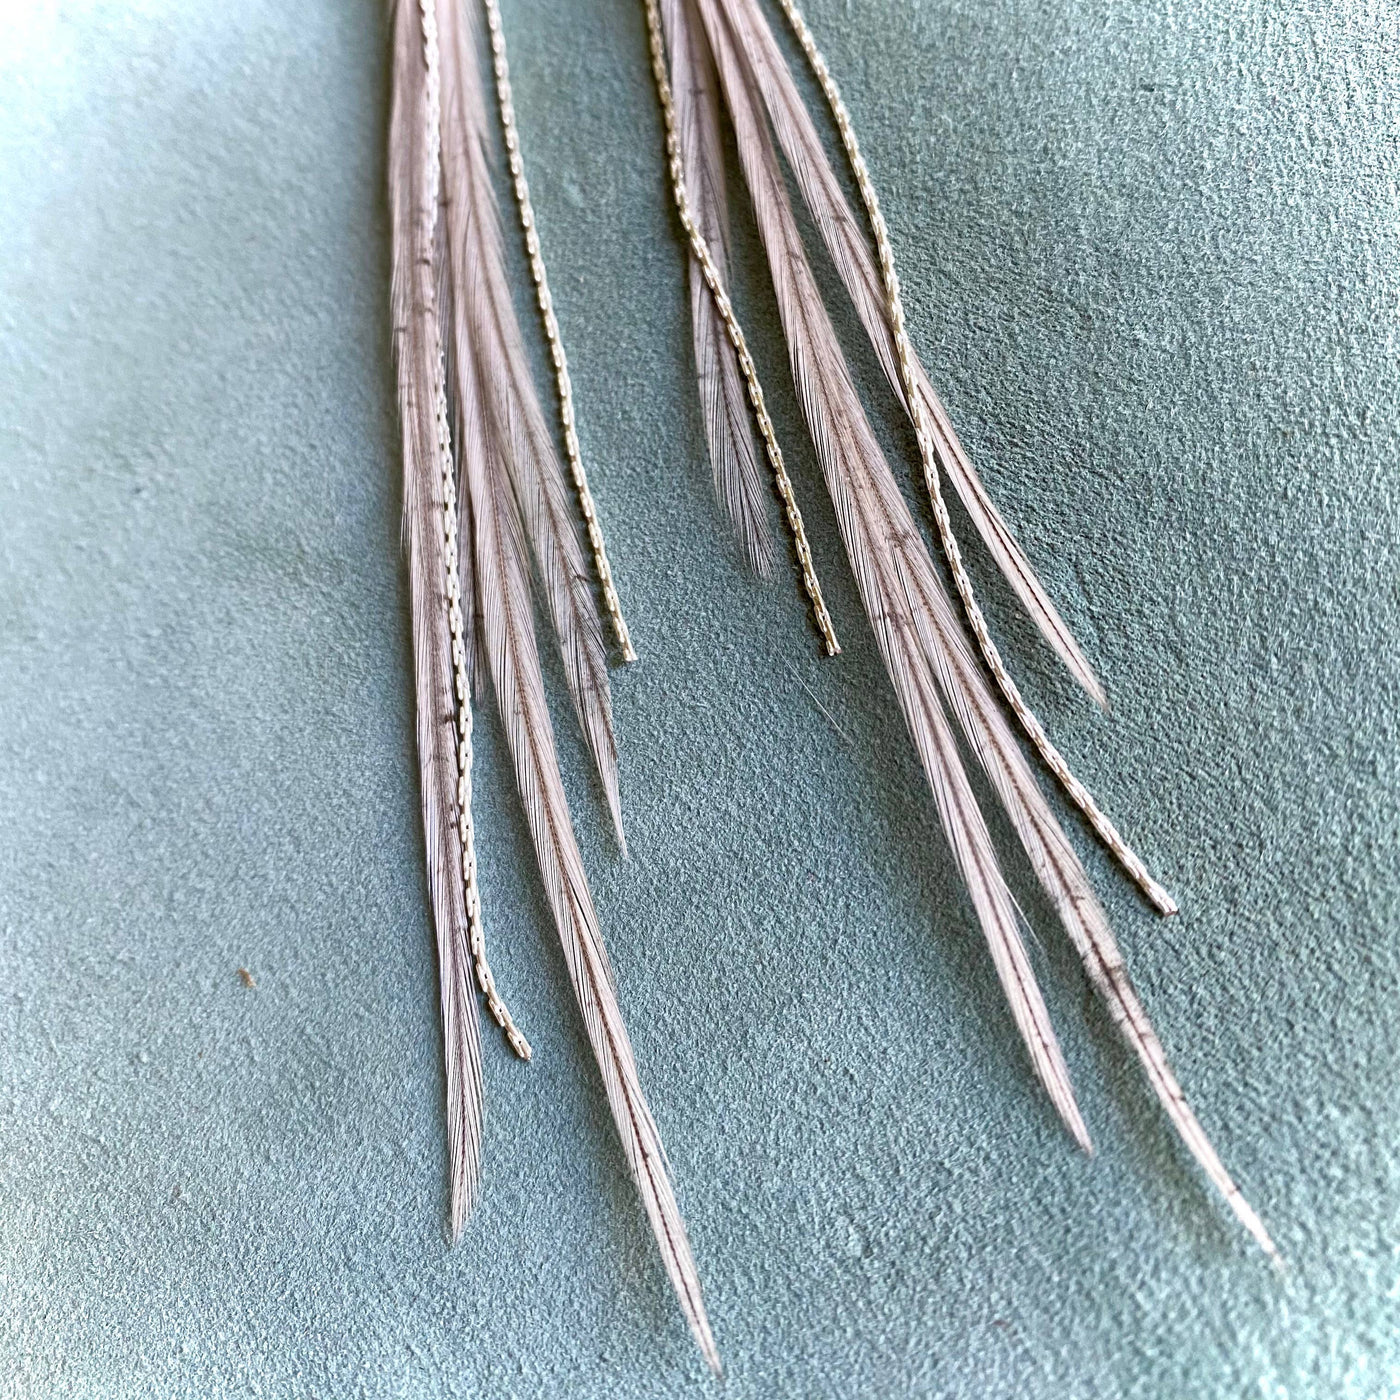 Mini Feather Earrings- Gray & Silver